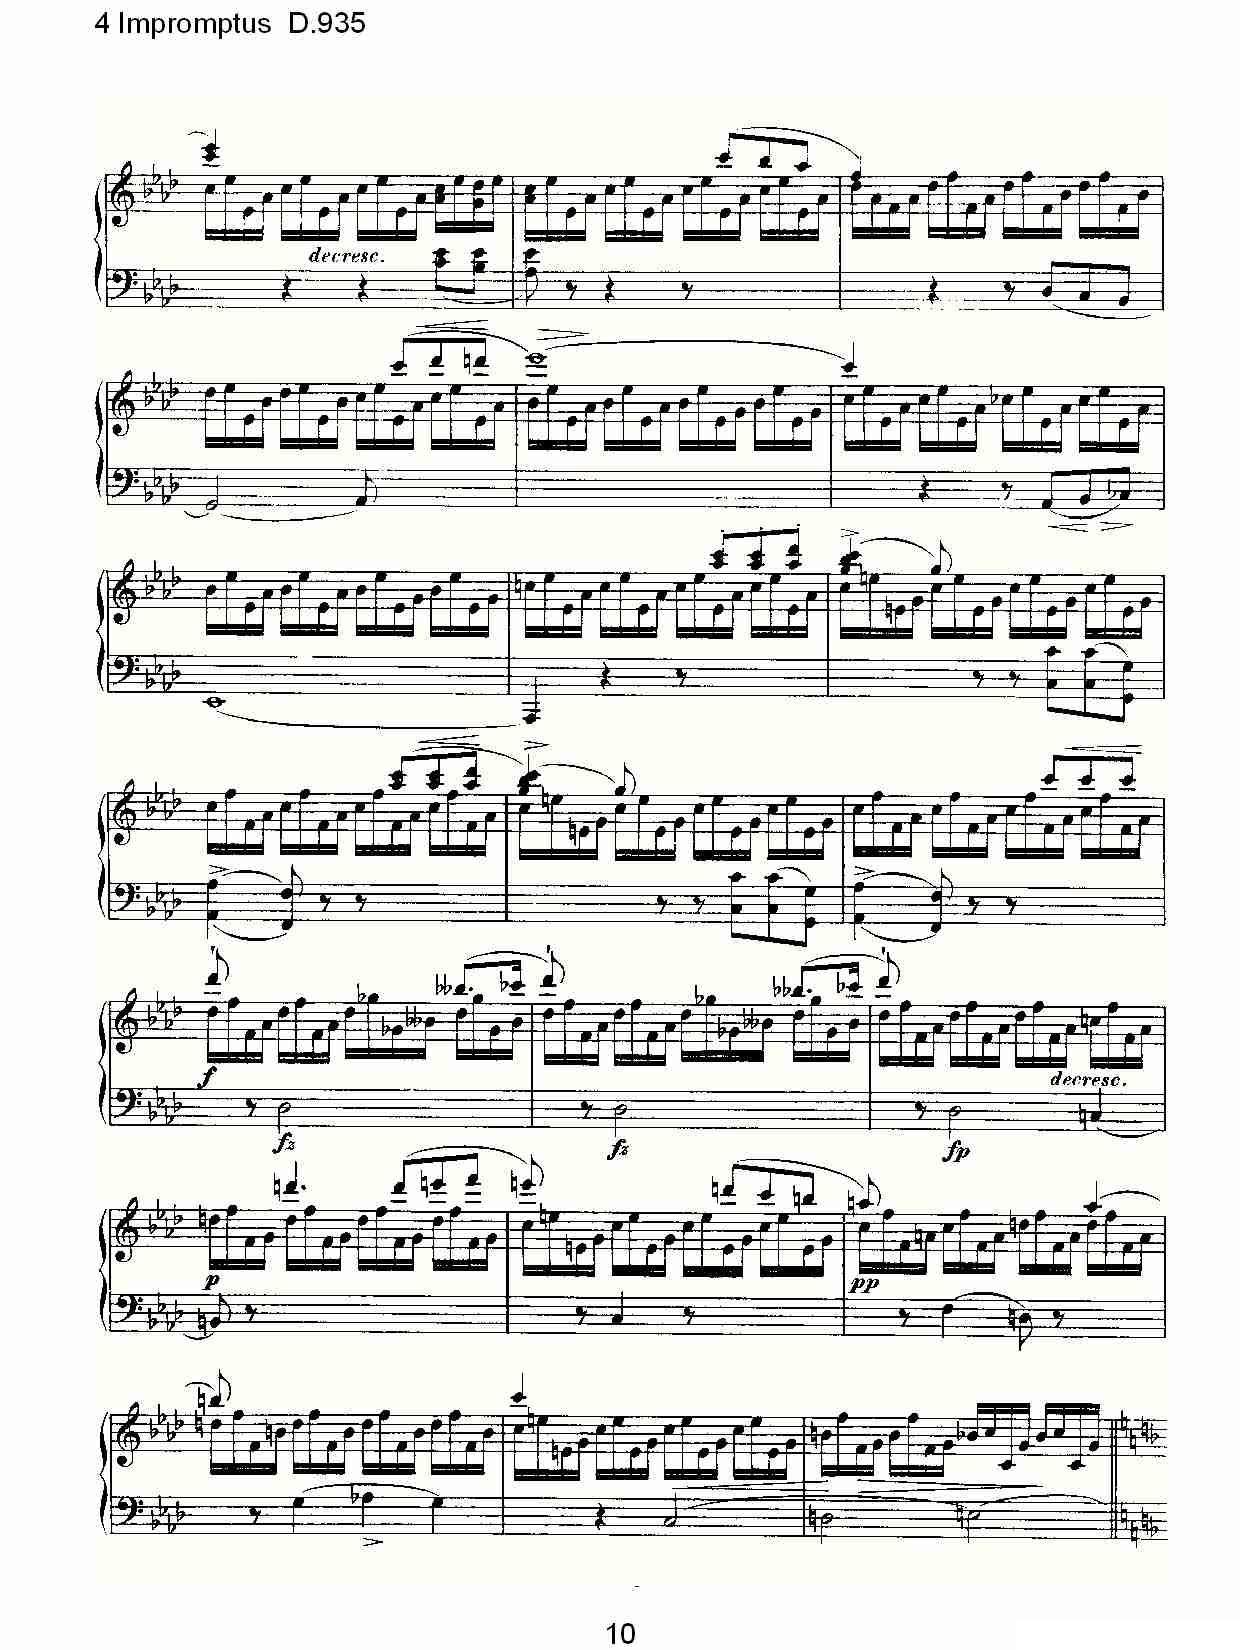 4 Impromptus D.935（4人即兴演奏D.935）钢琴曲谱（图10）